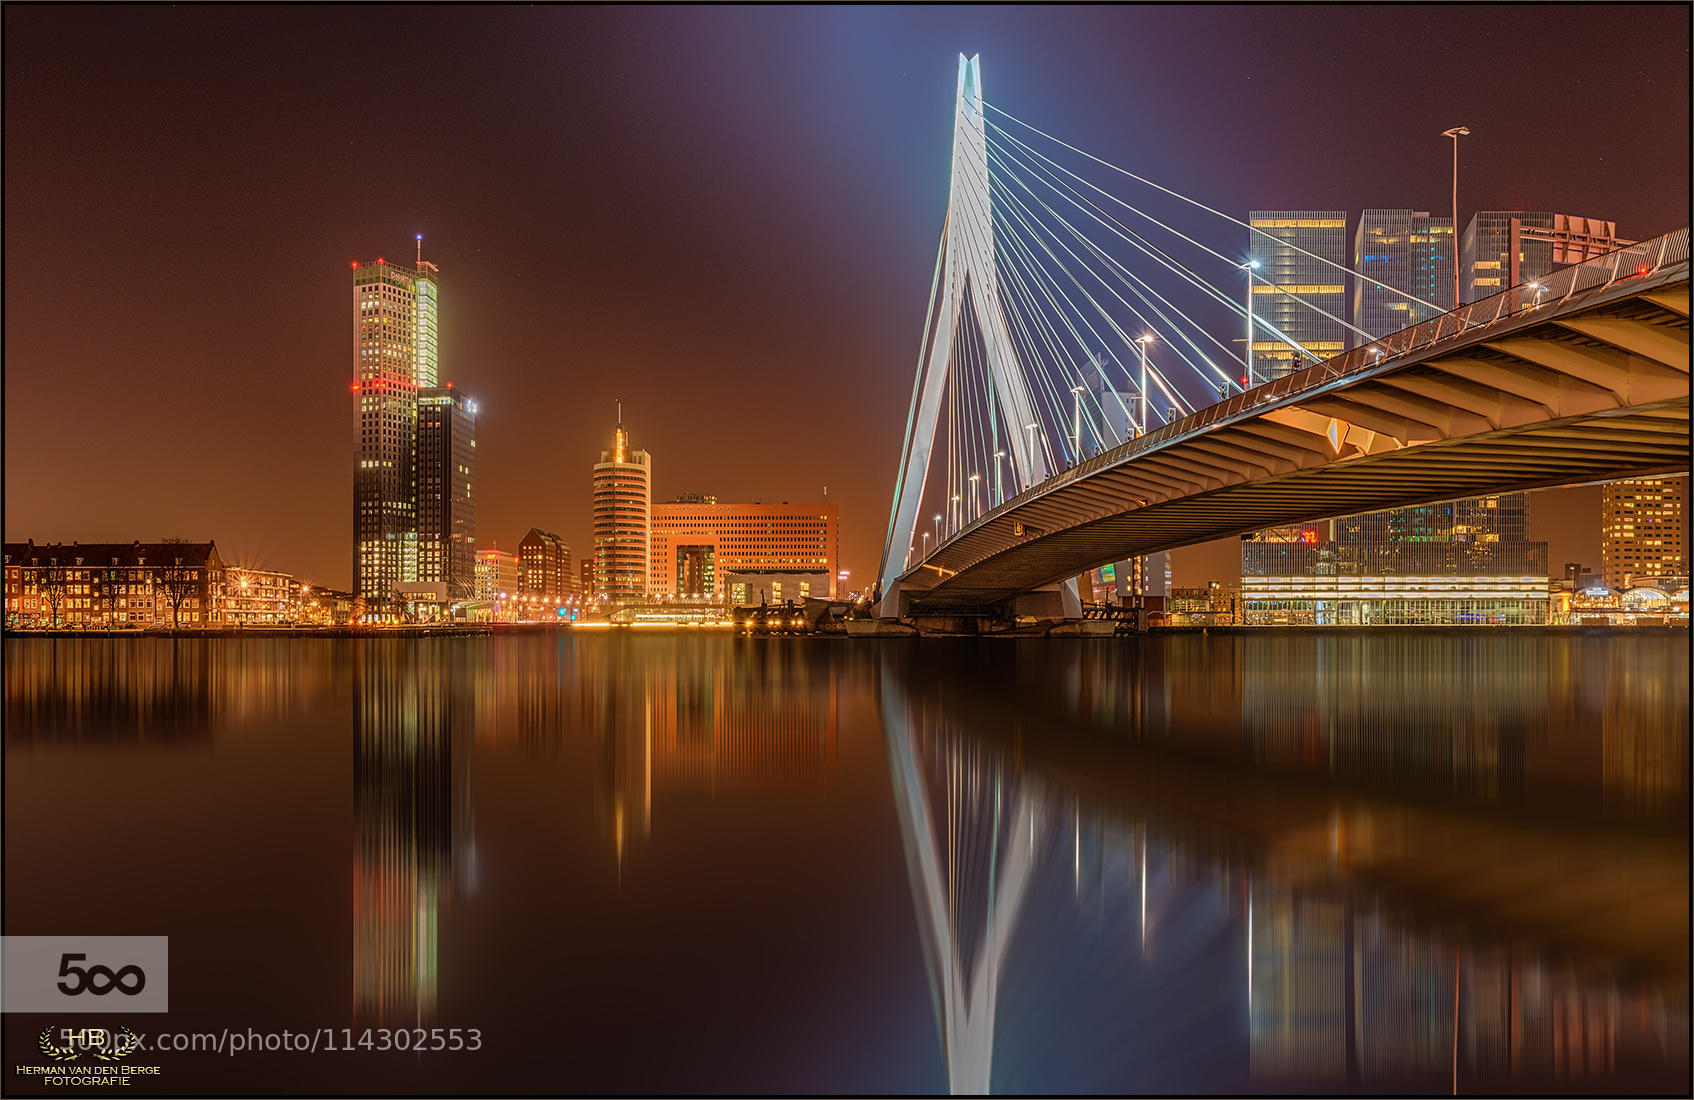 Reflections of Rotterdam